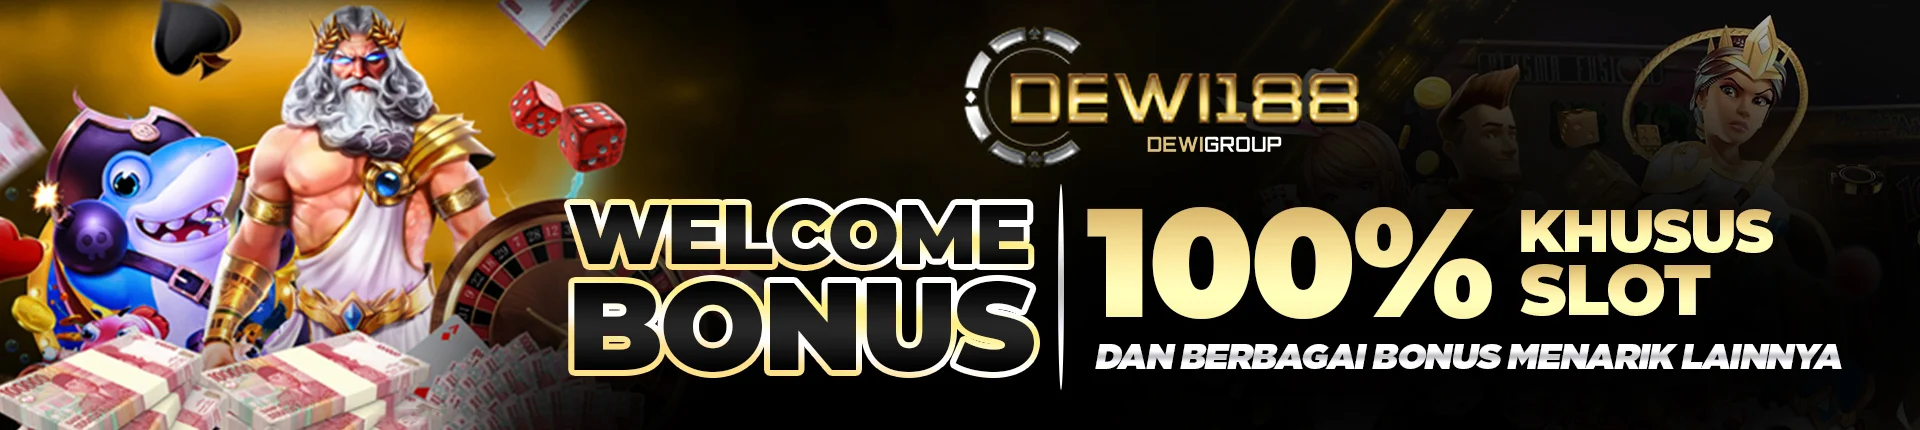 DEWI188 | Situs Judi Bola Online Bonus Mix Parlay 100% Didepan